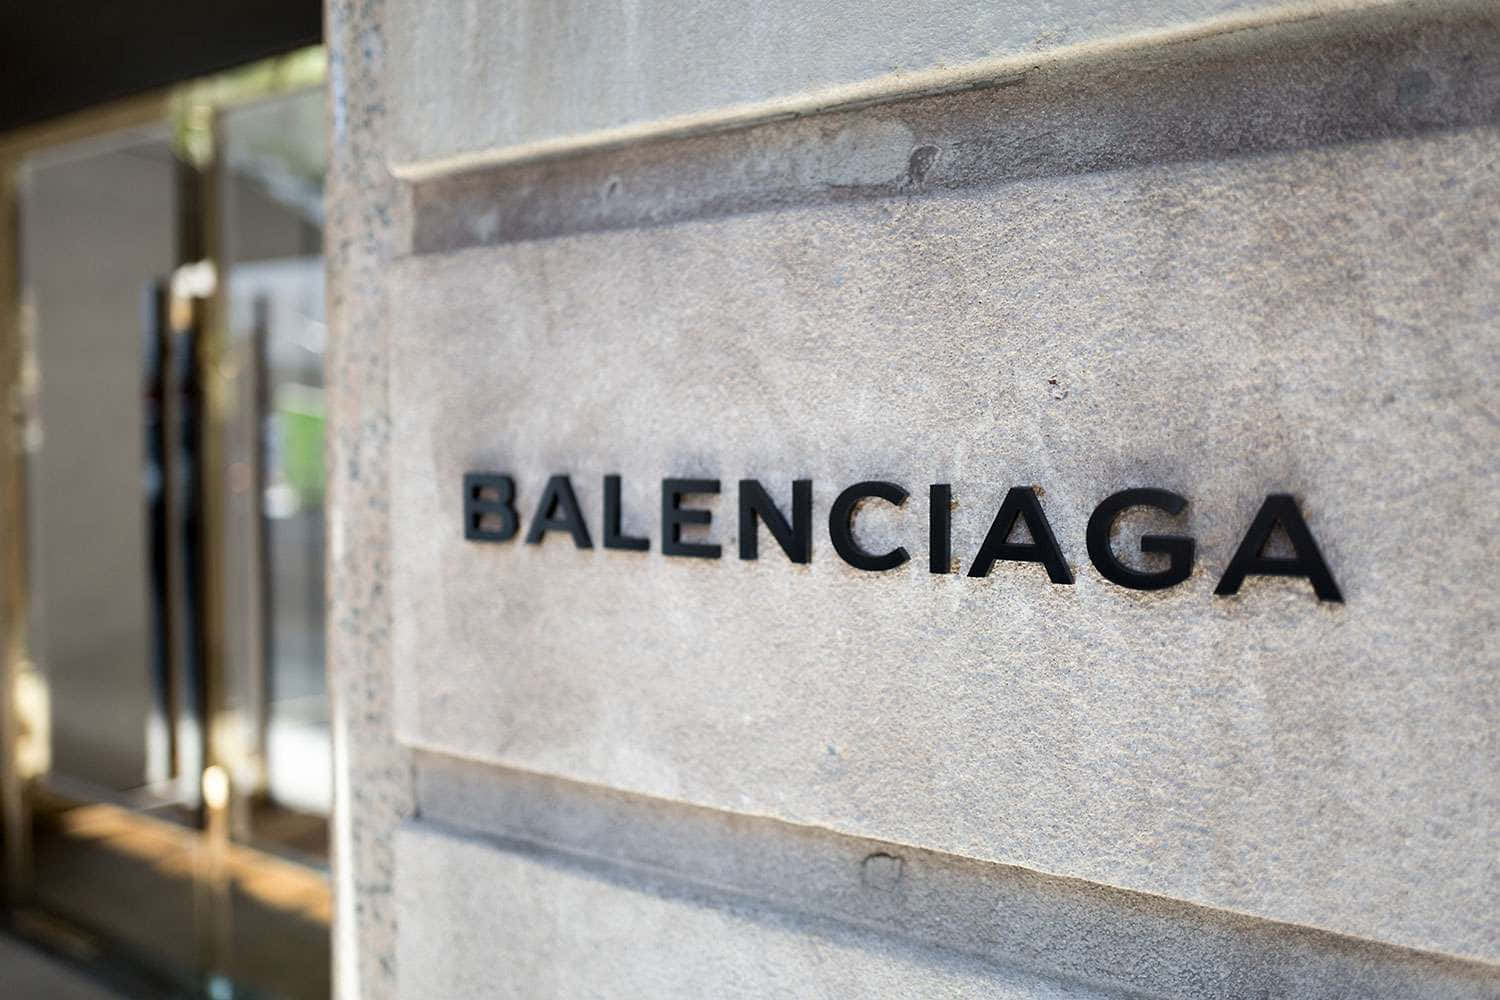 Stay ahead of the fashion curve with Balenciaga